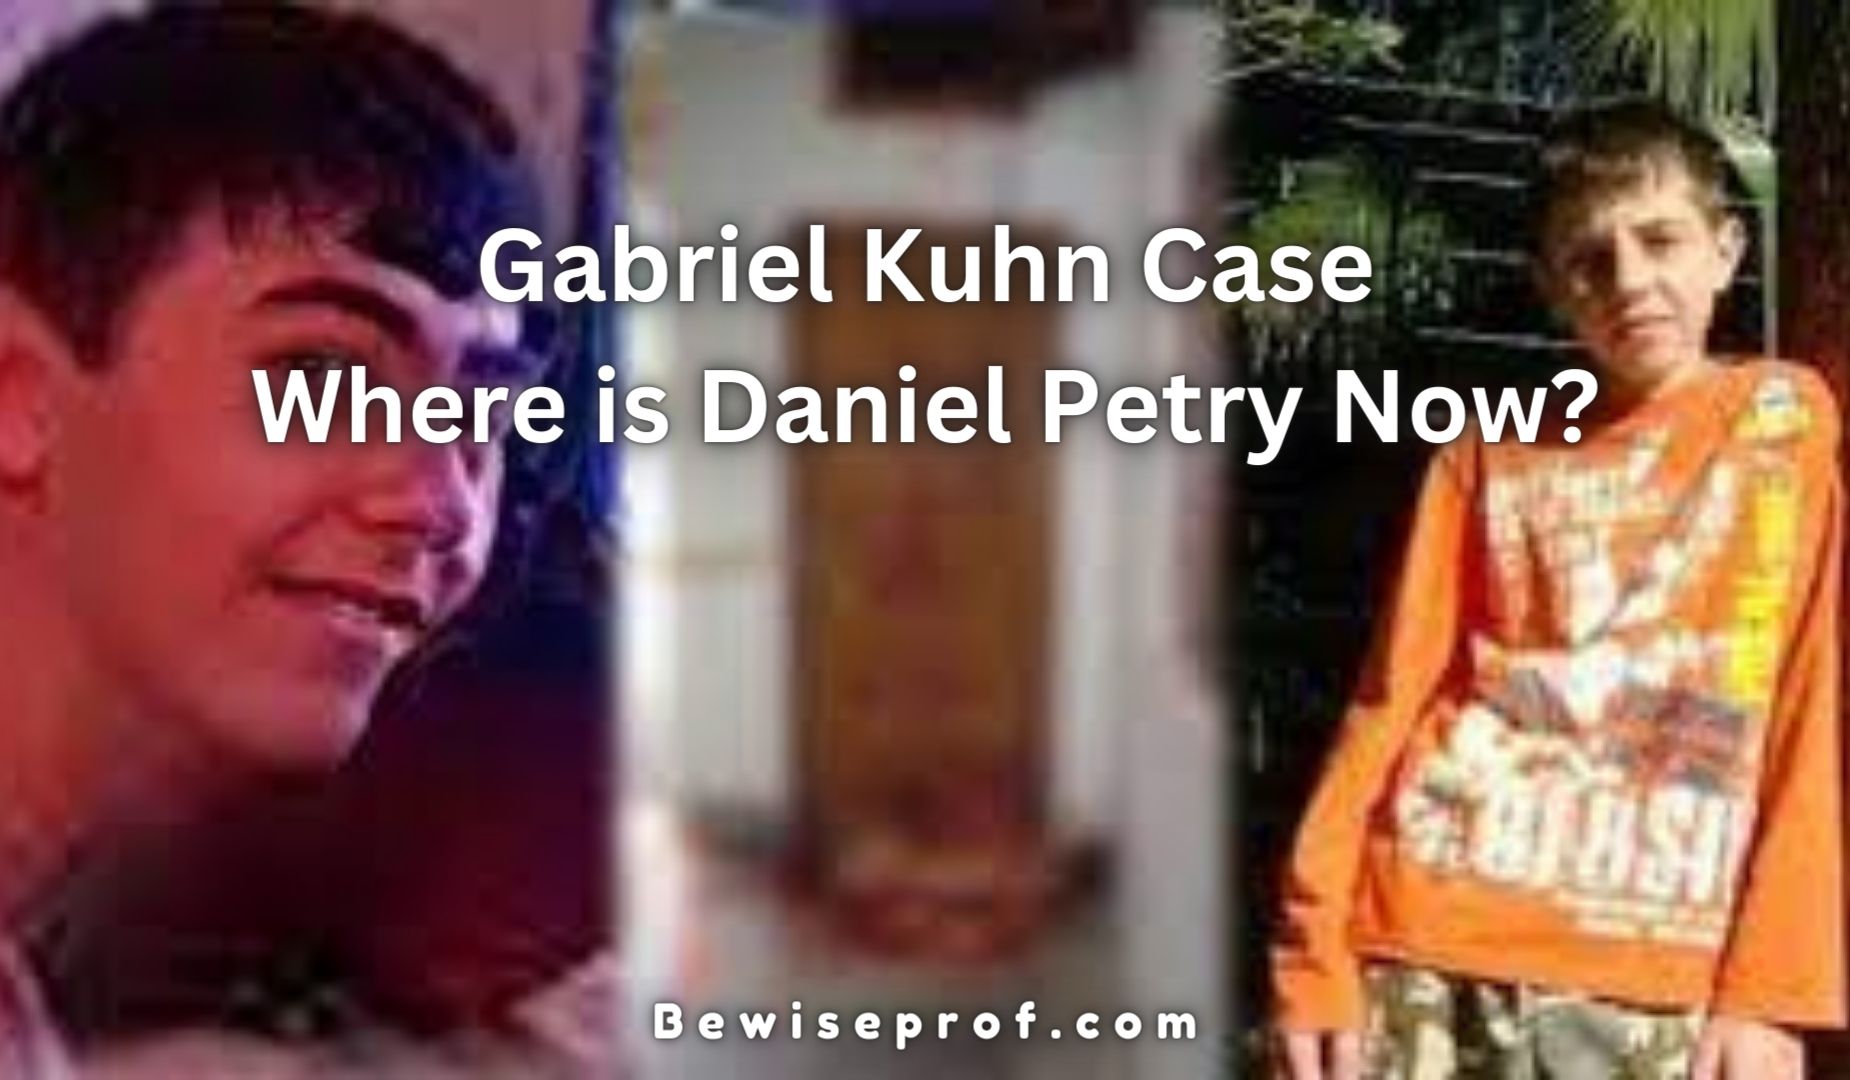 Gabriel Kuhn Case: Where is Daniel Petry Now?